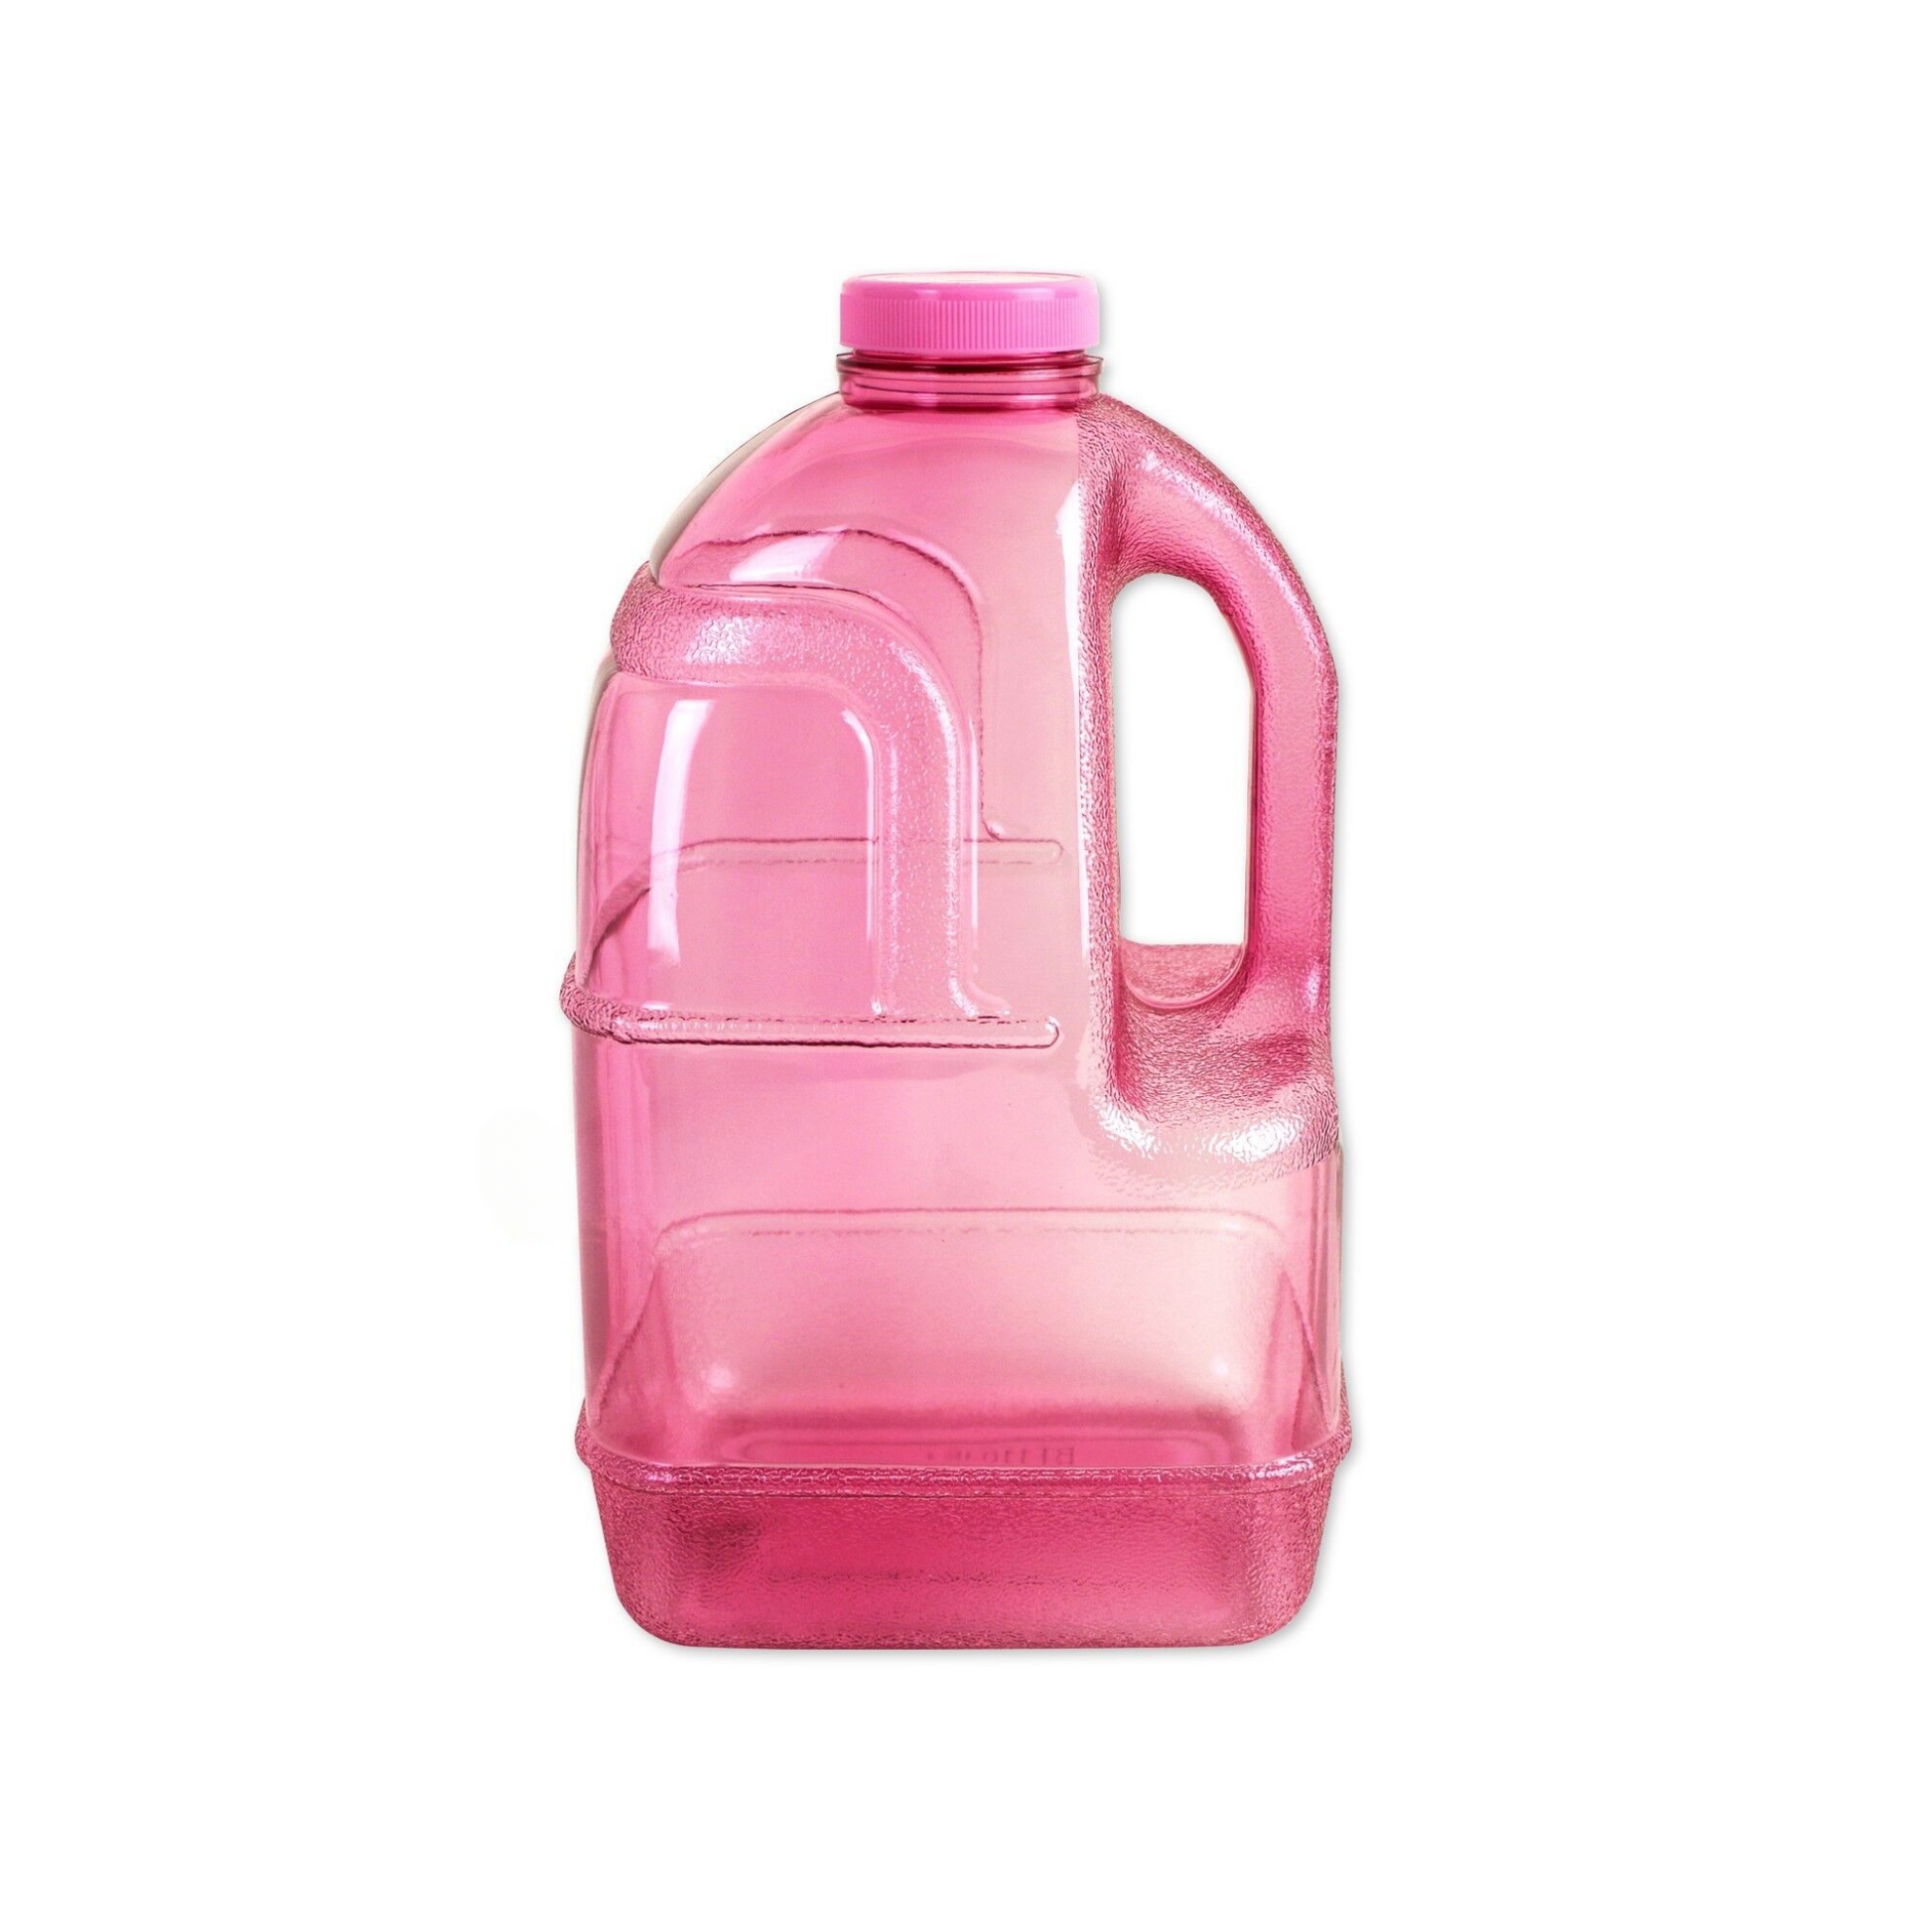 Pink BPA-free 1-gallon plastic jug for water storage and dispensing